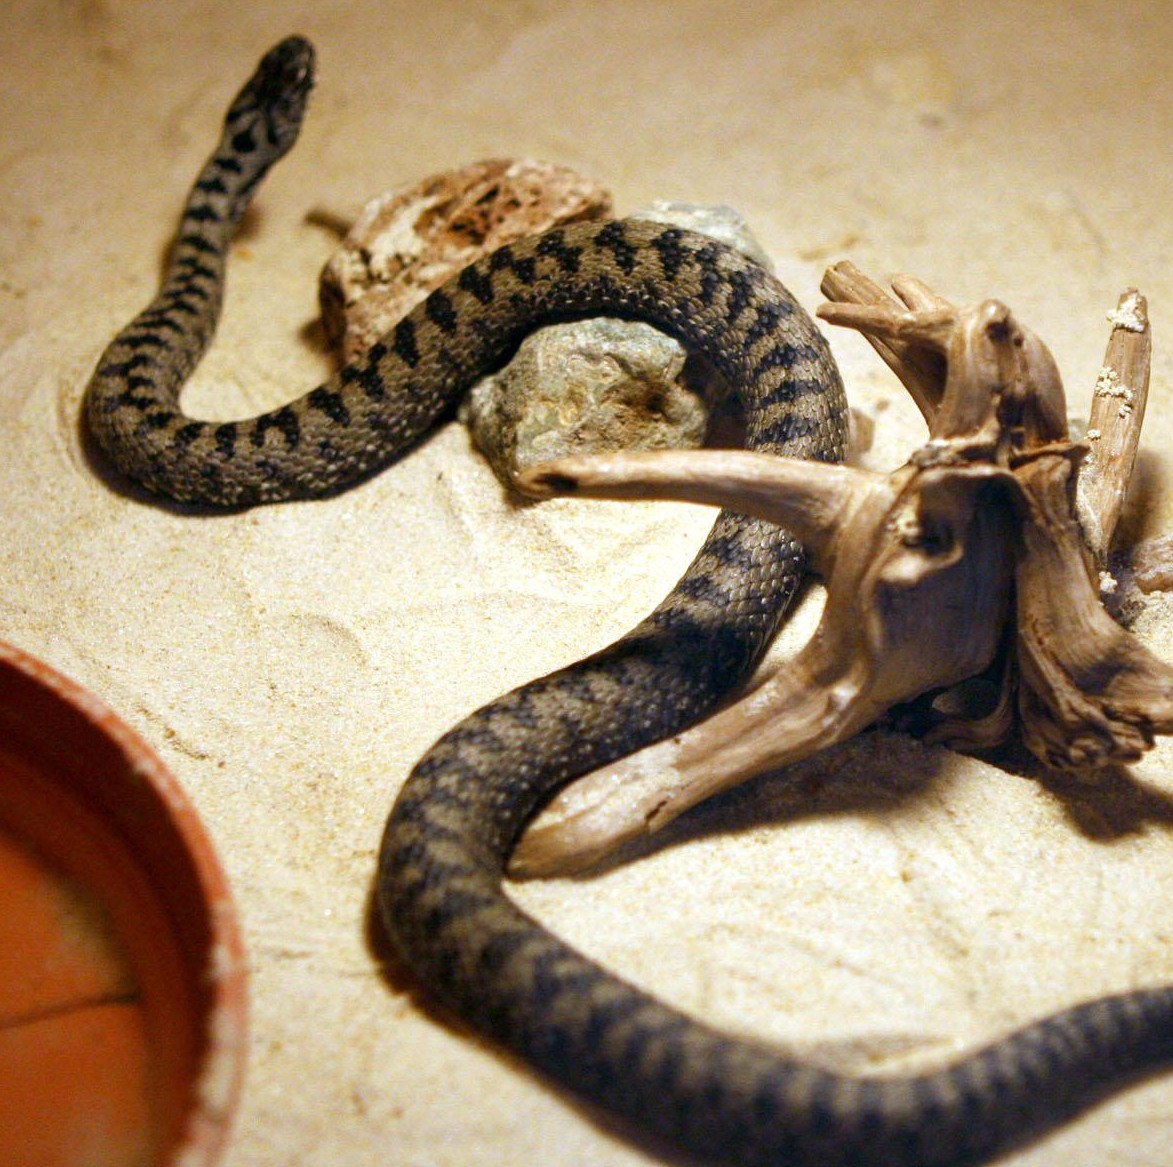 Змия ухапа младеж